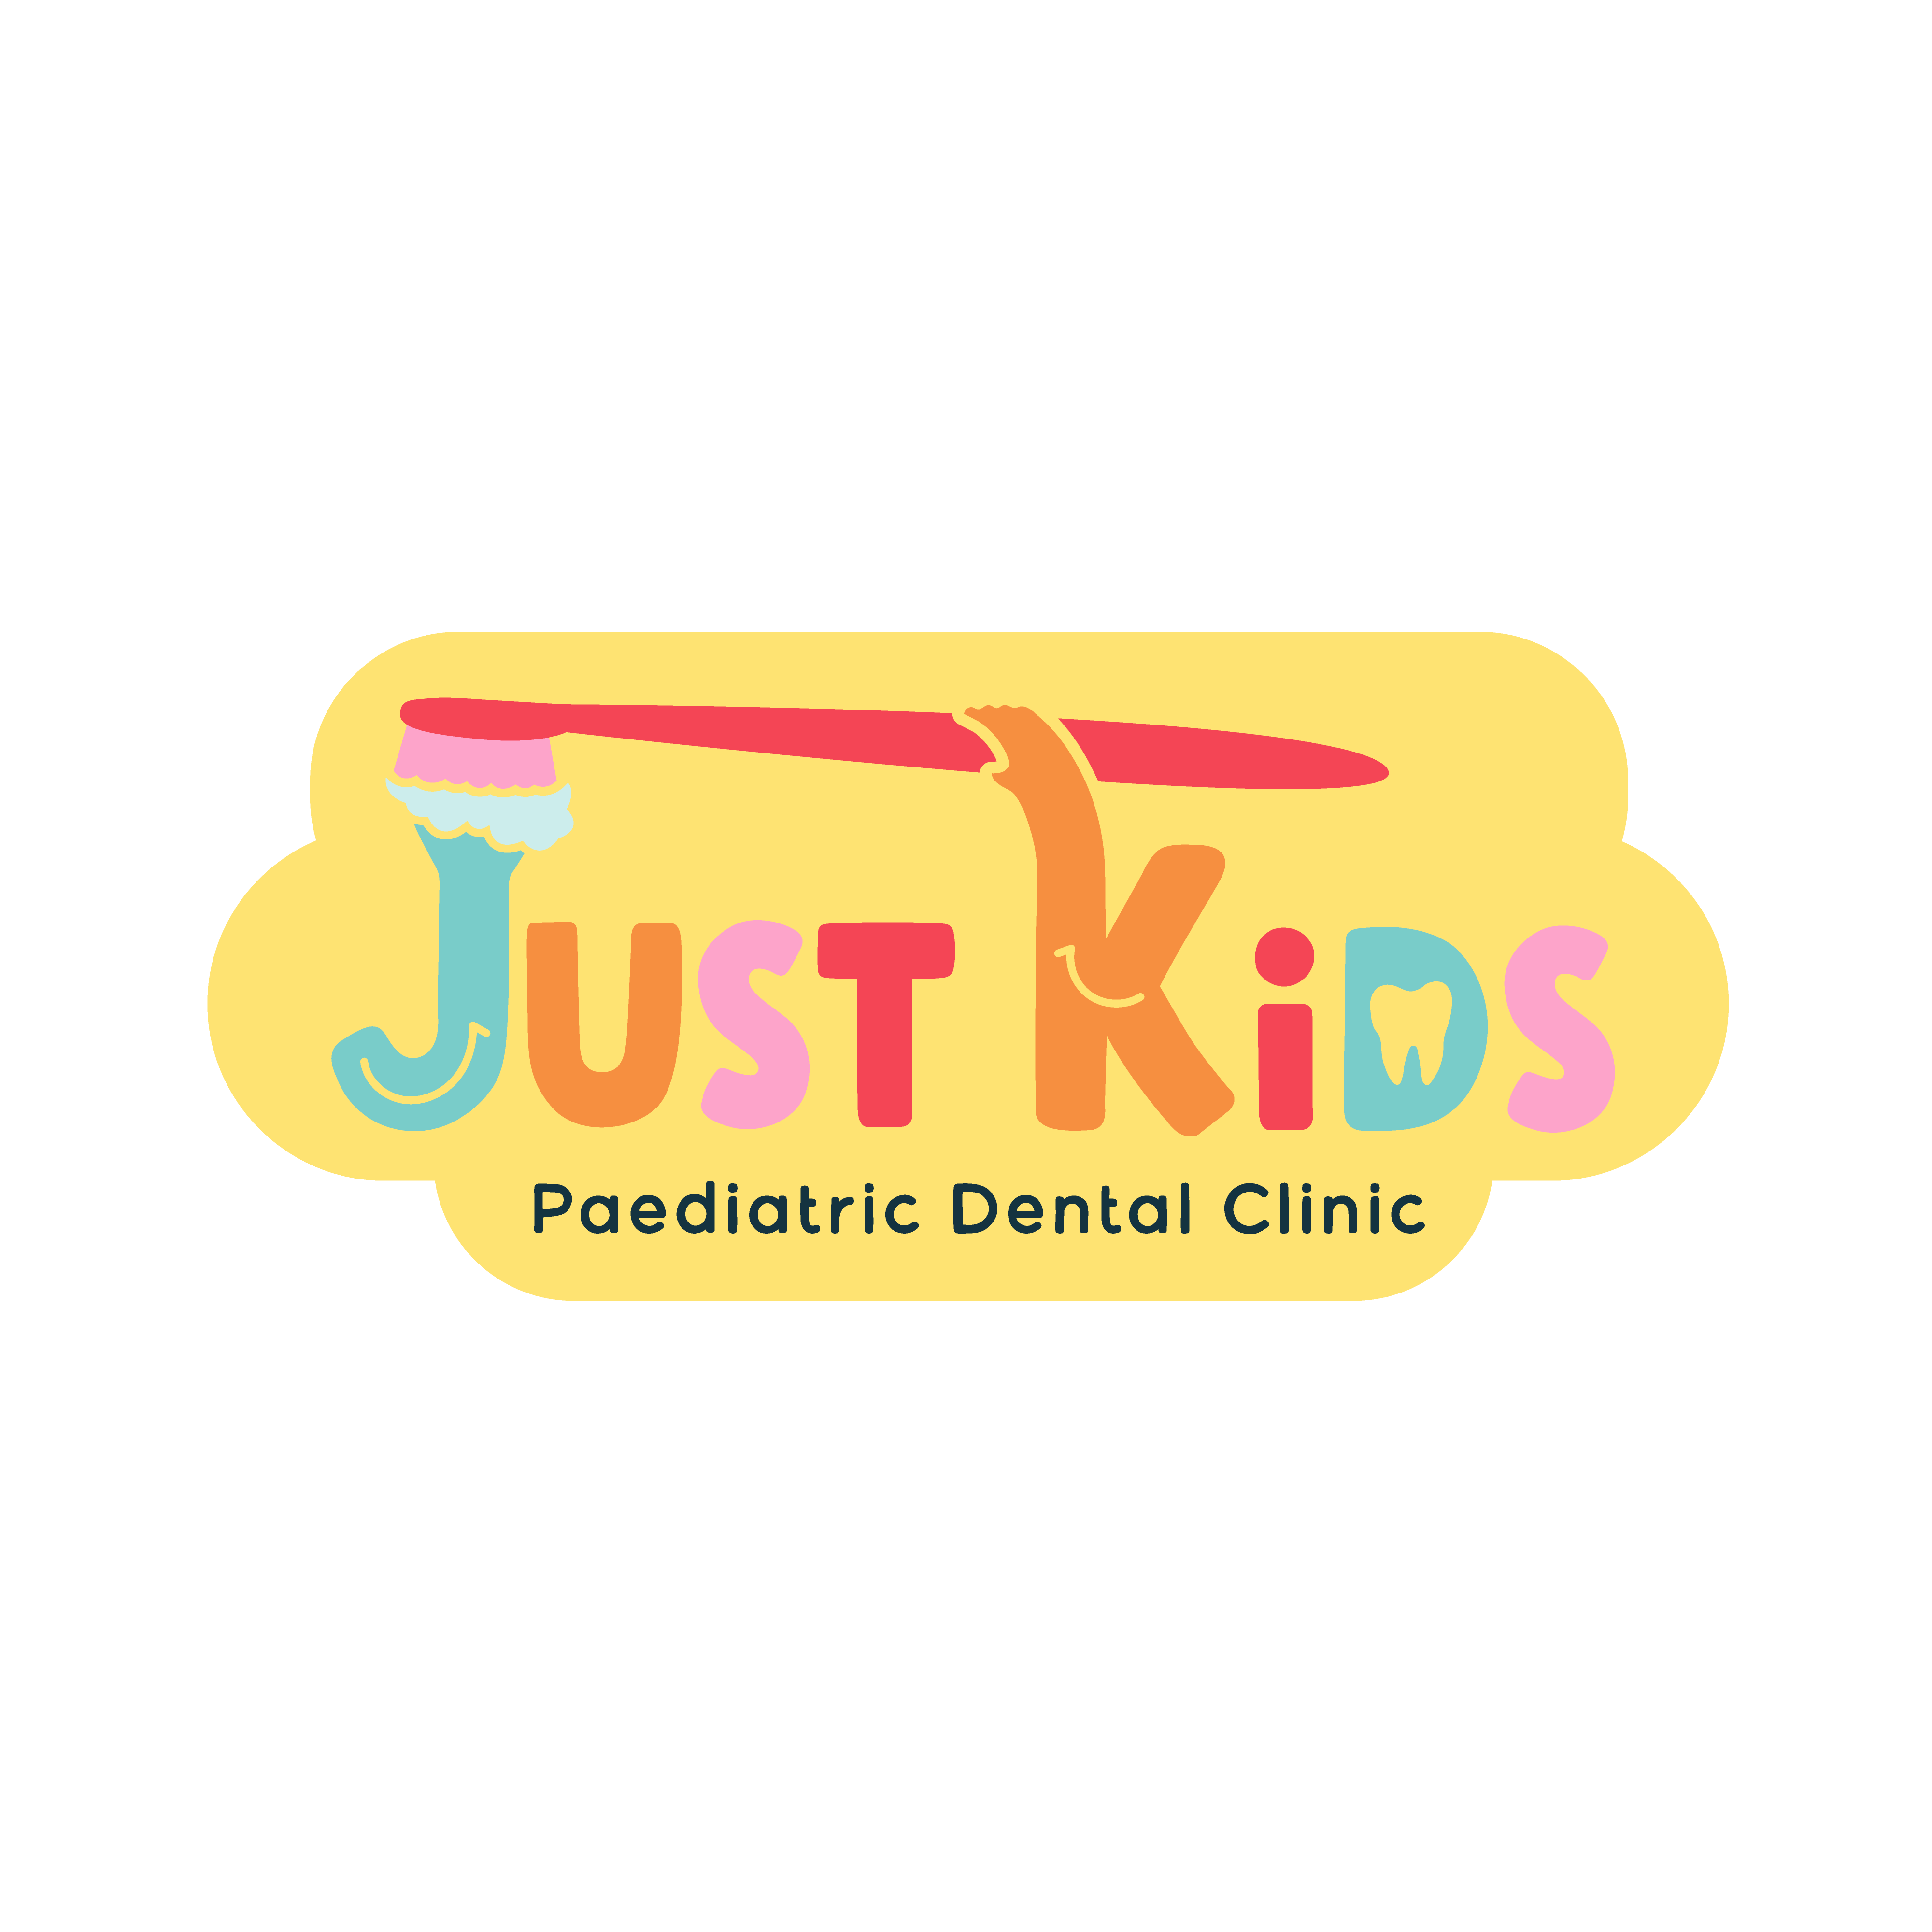 Just kids dental clinic - singapore's friendly pediatric dentist dr jessica khong